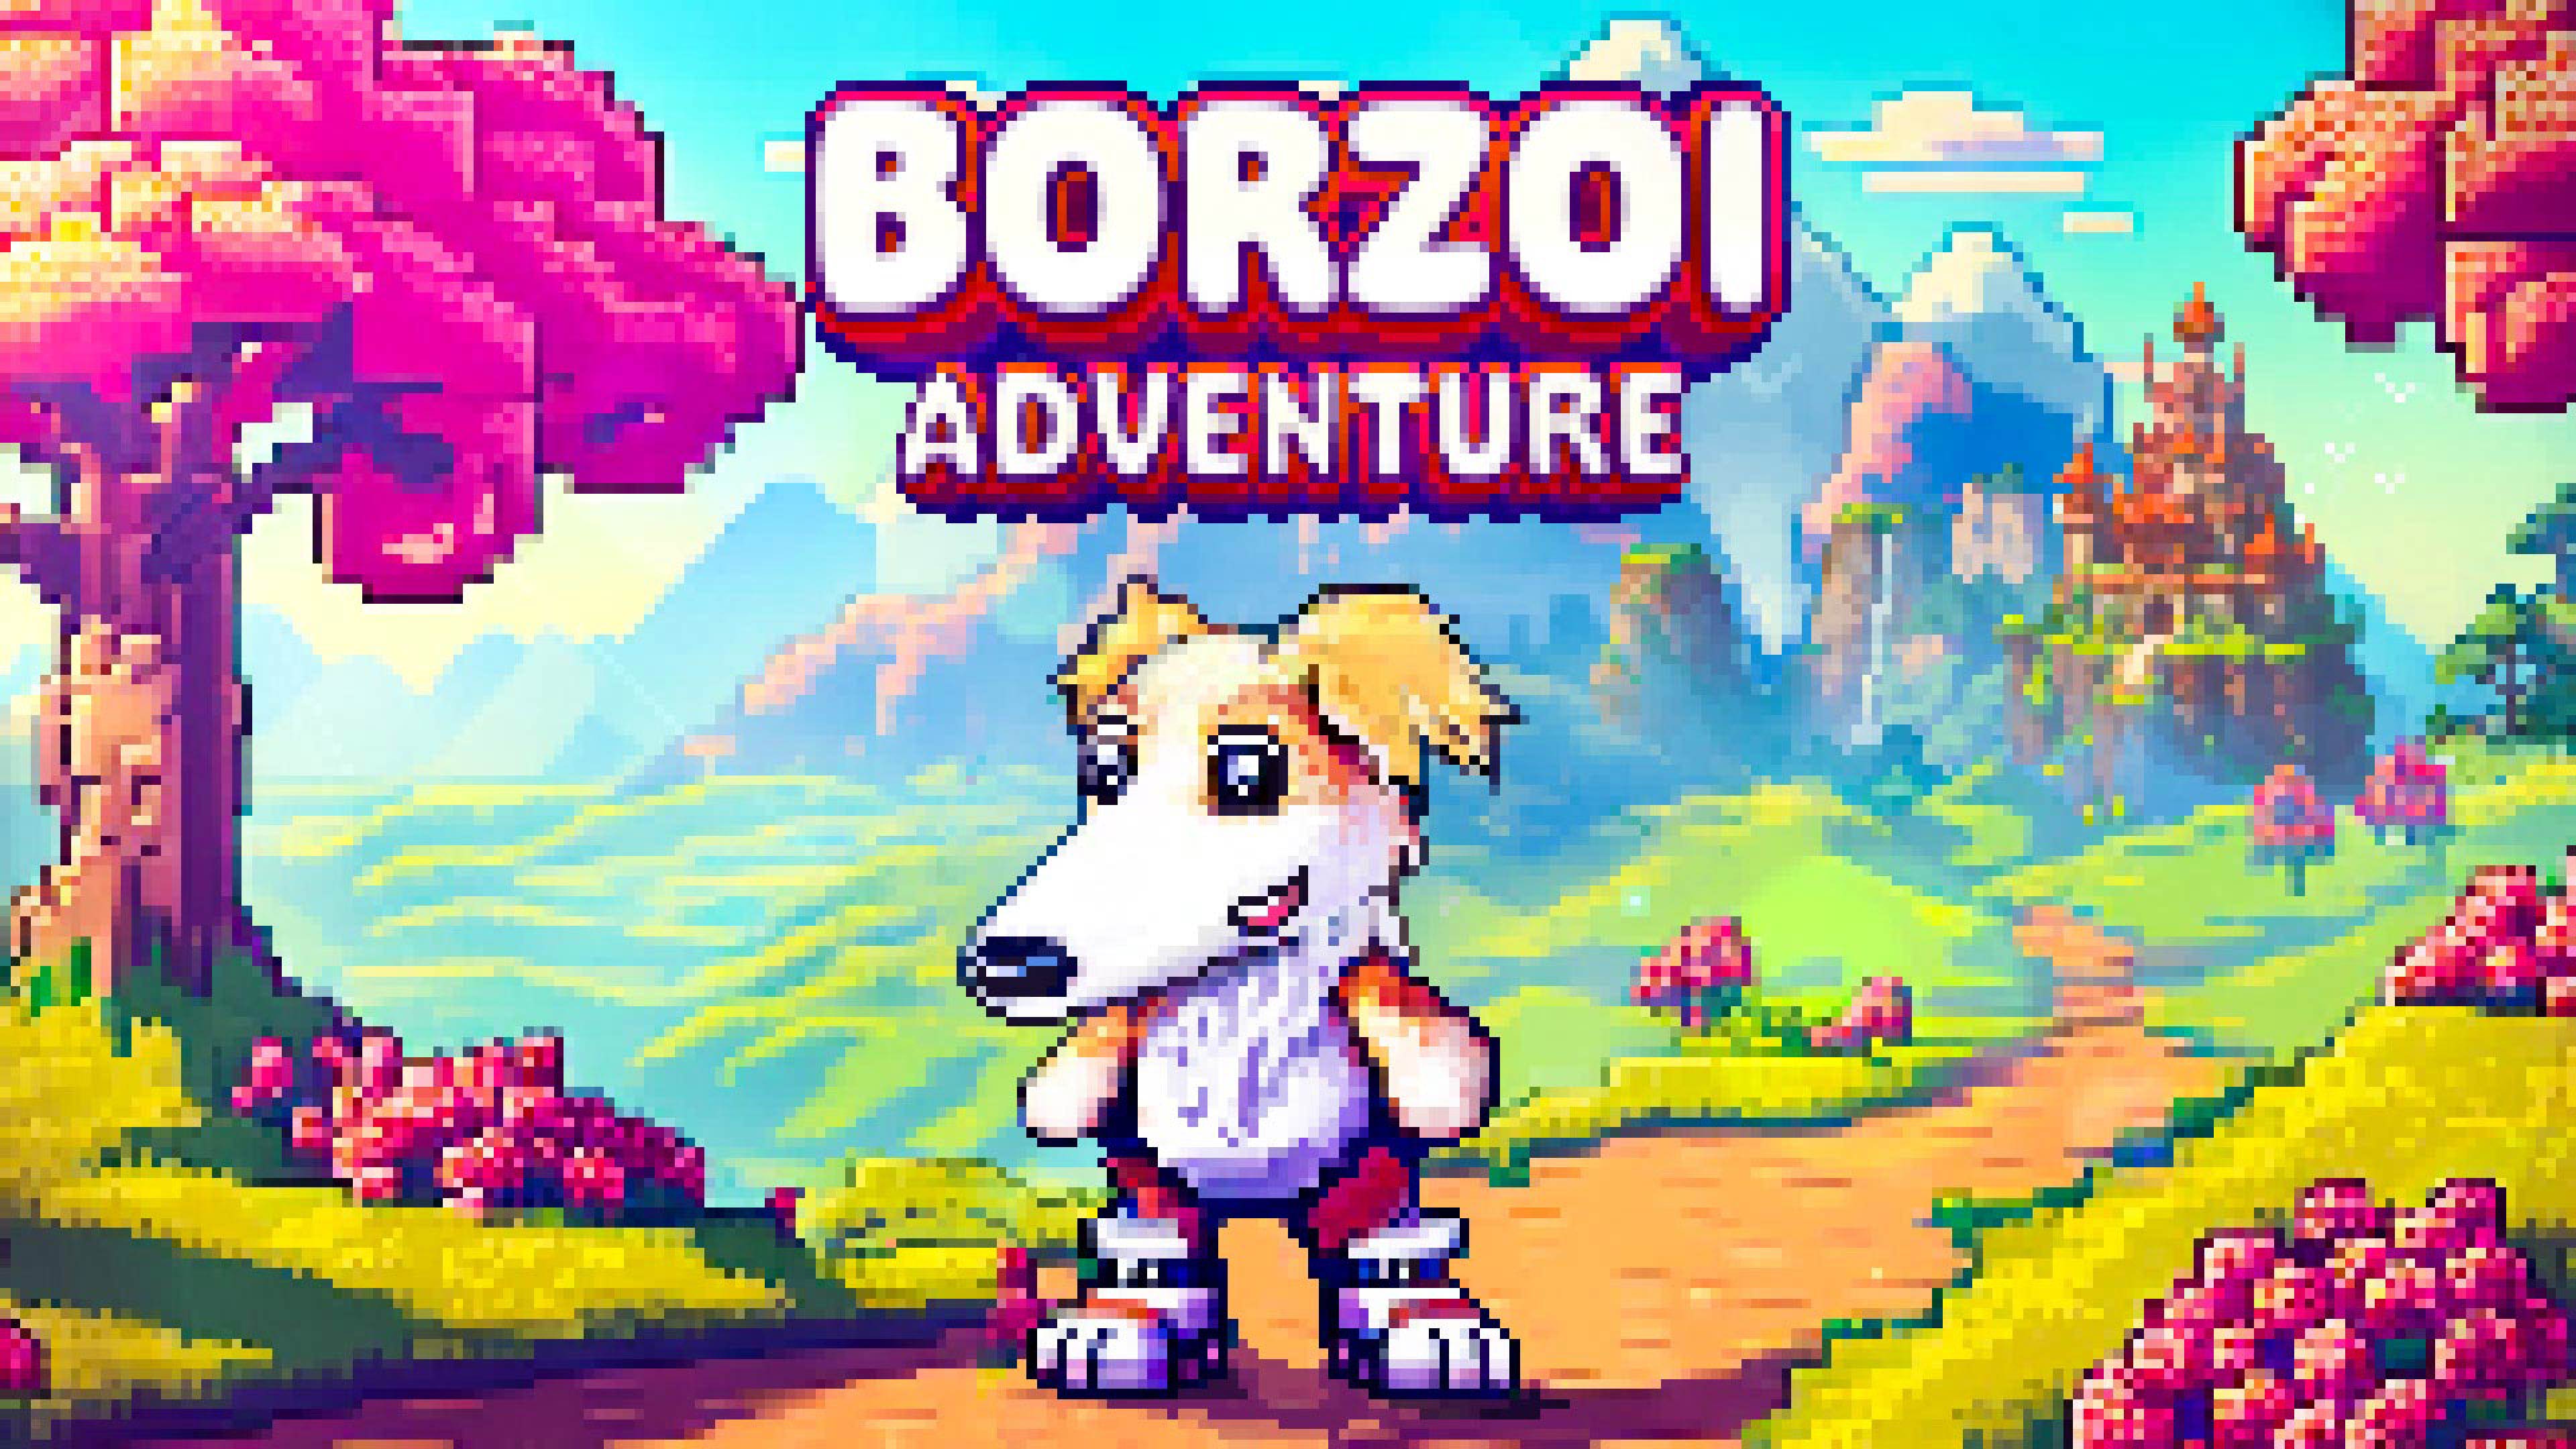 Borzoi Adventure